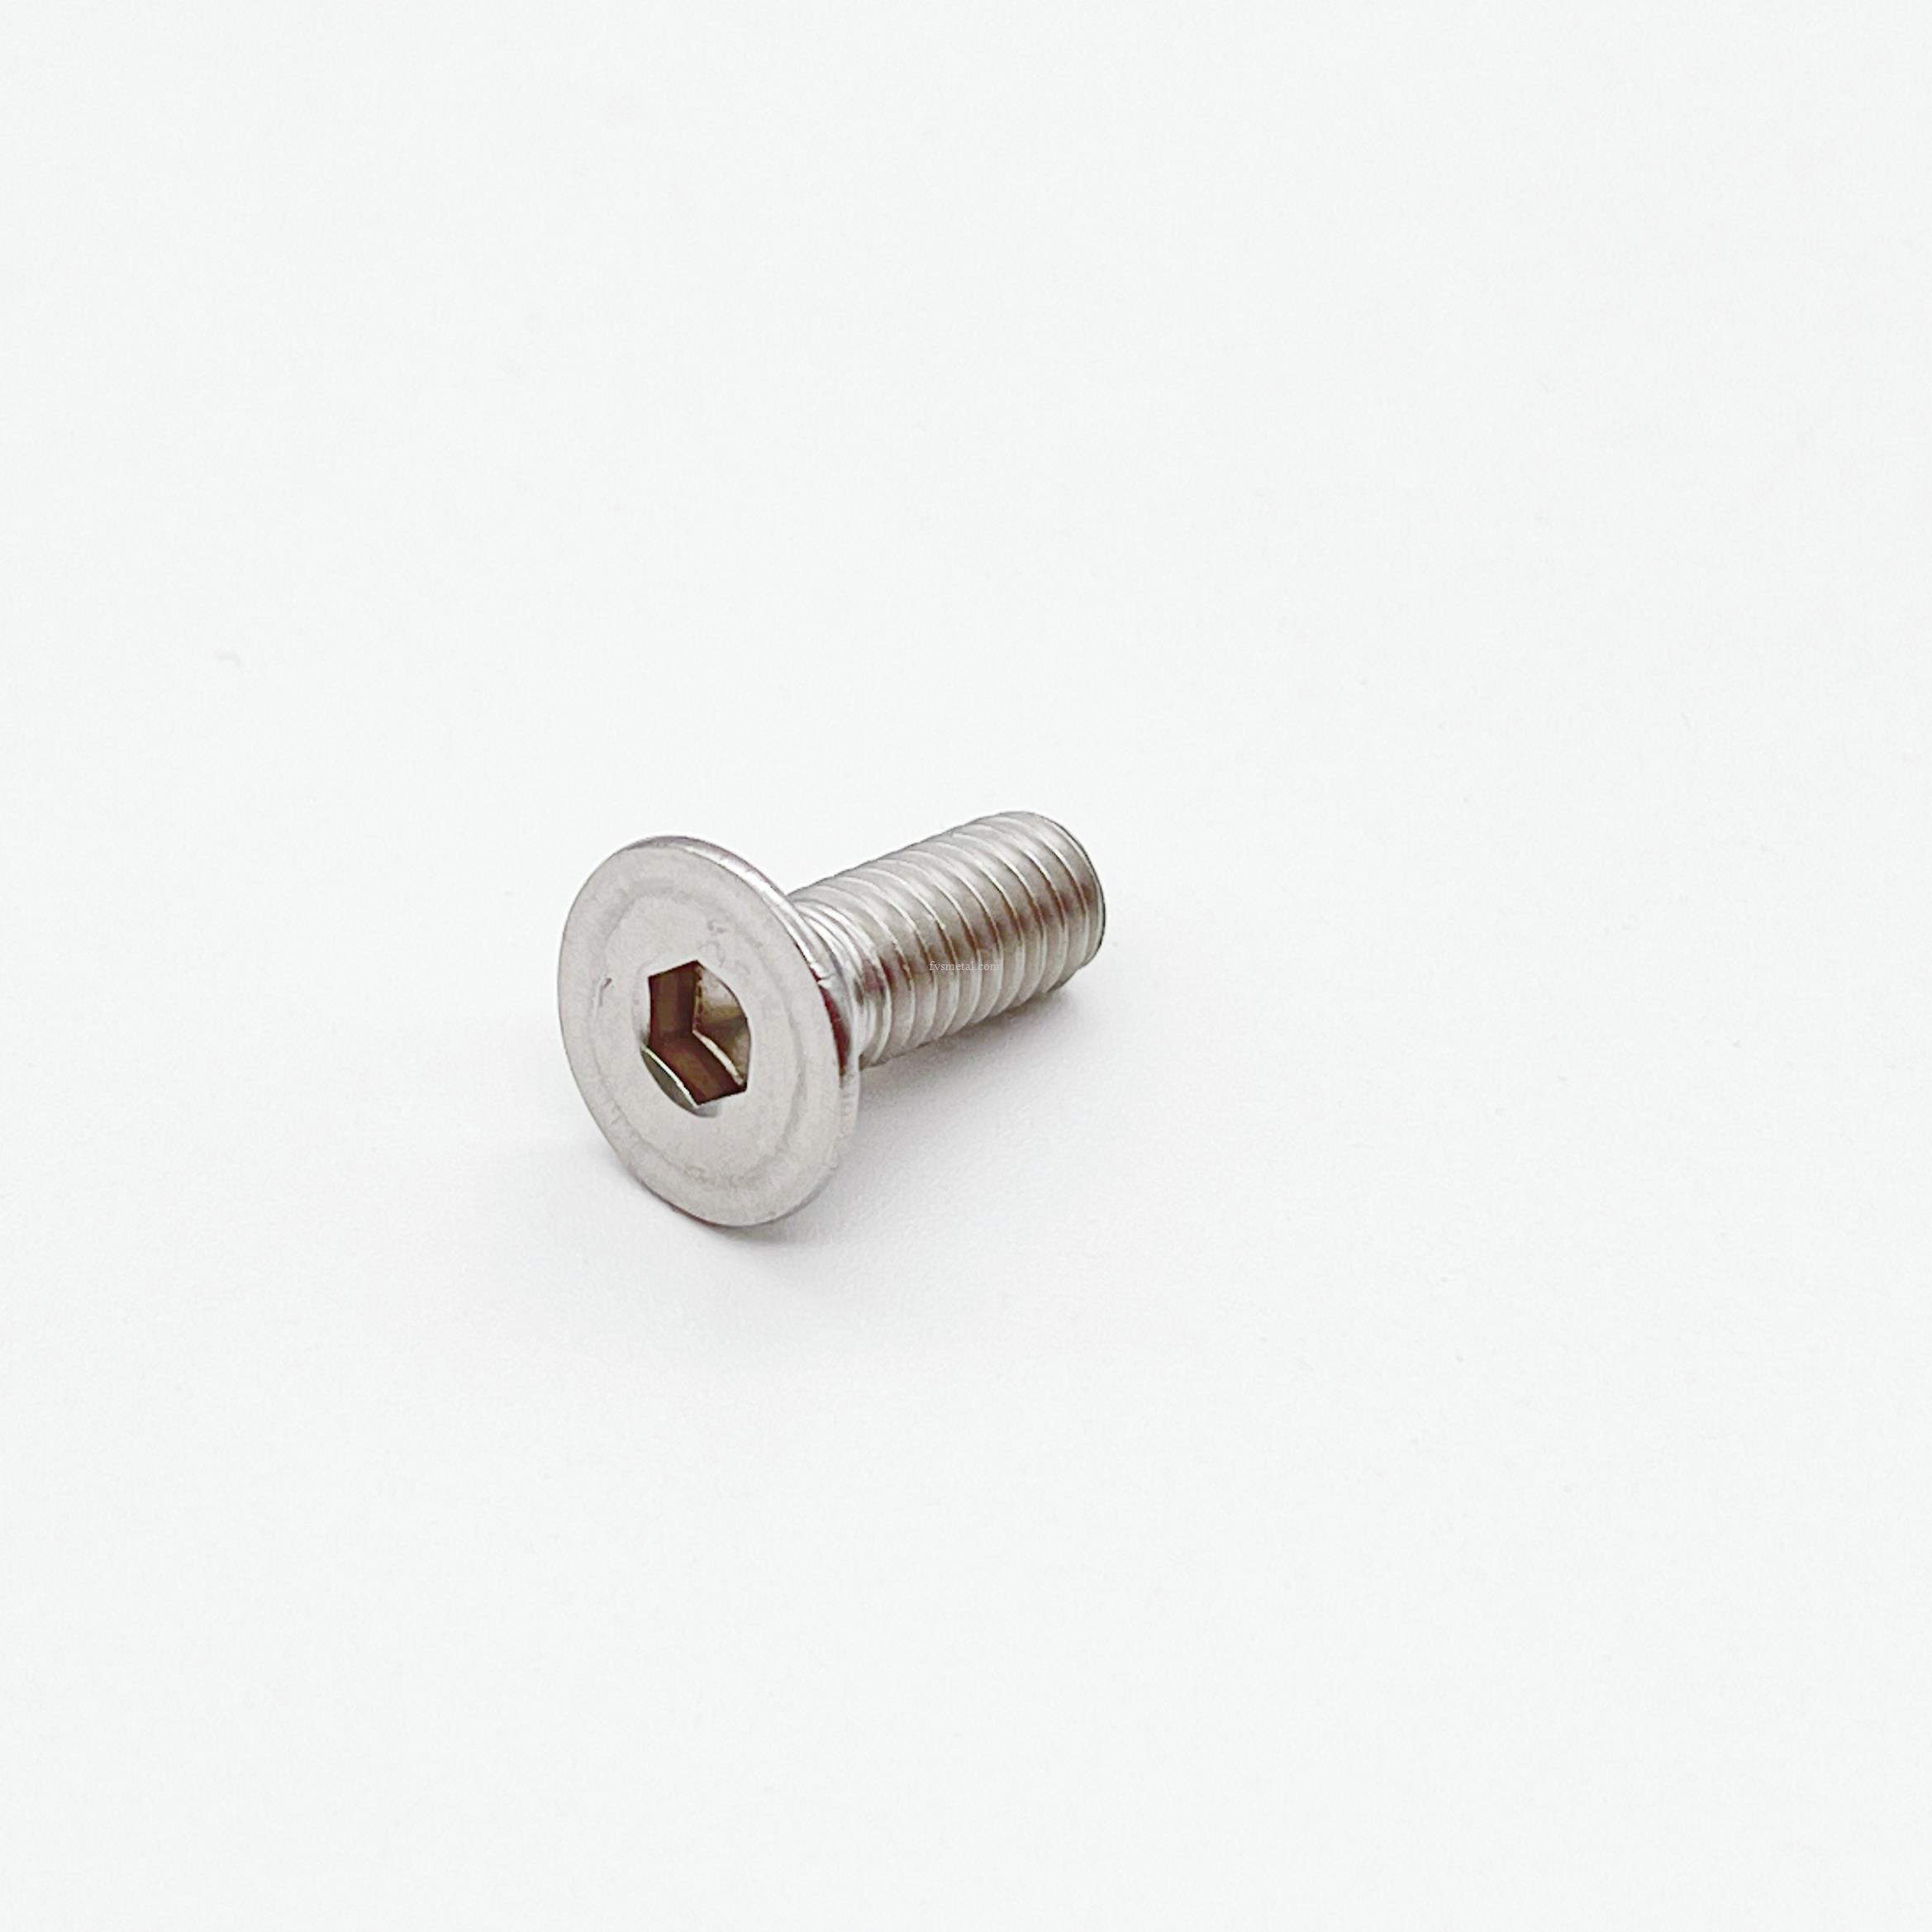 DIN 7991 Hexagon socket countersunk head screw